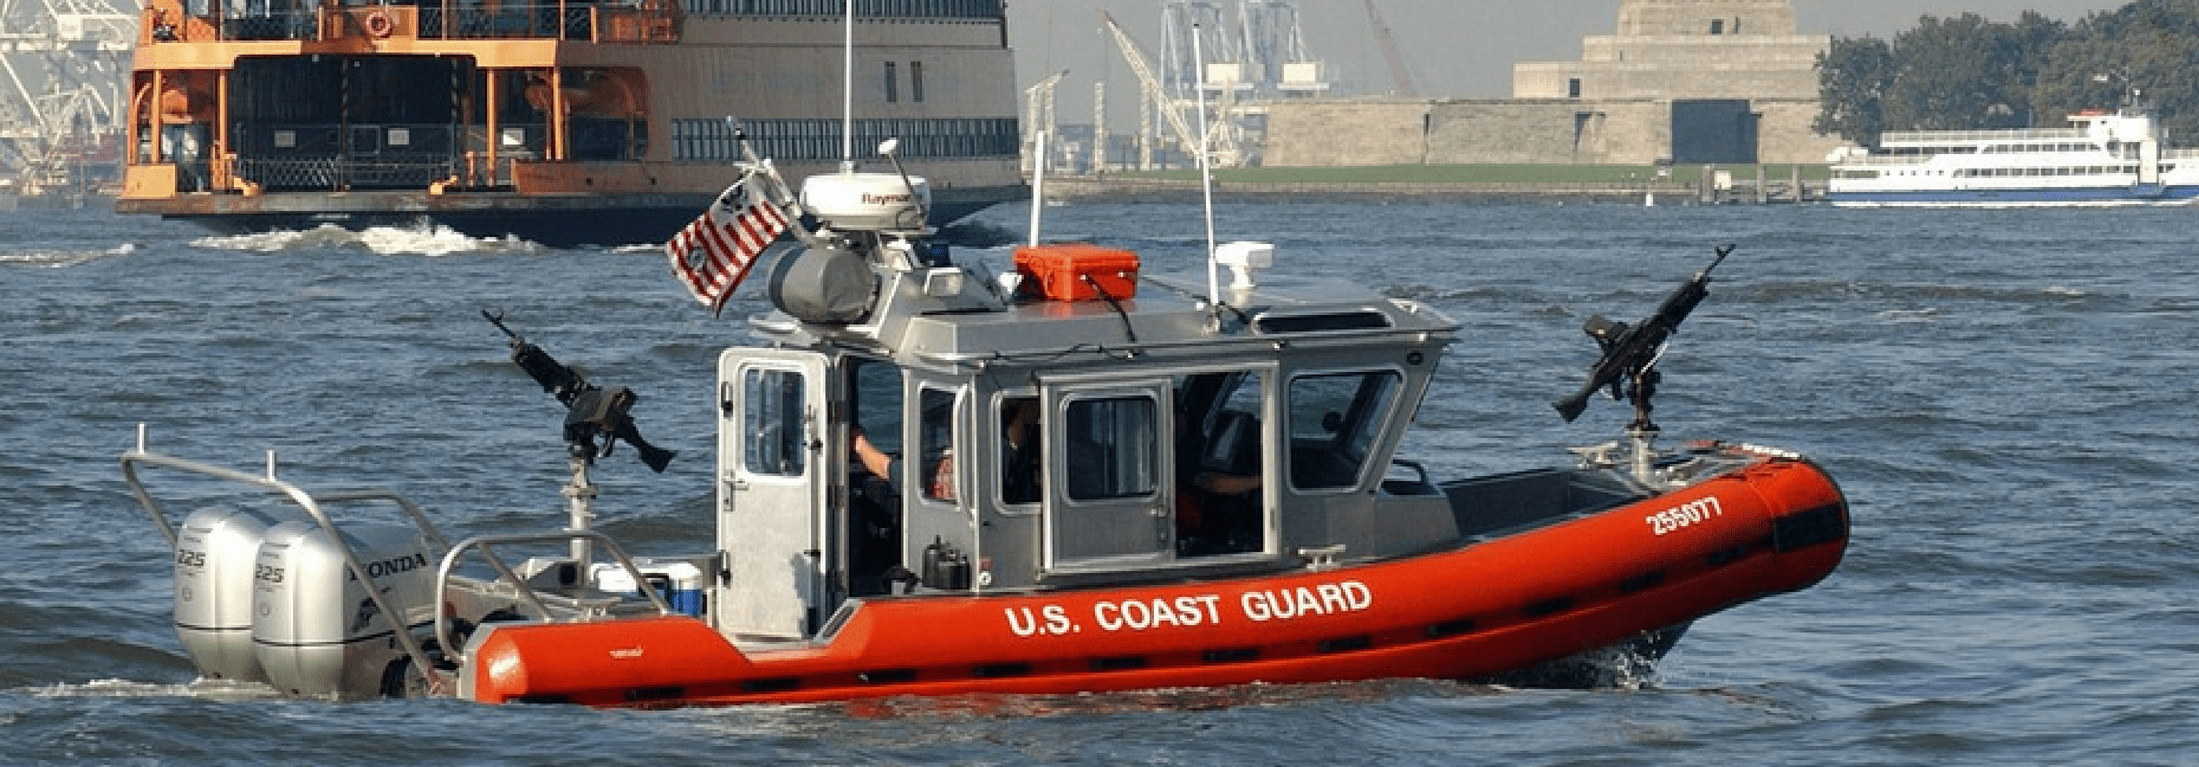 Coast Guard Response Boat New York Harbor